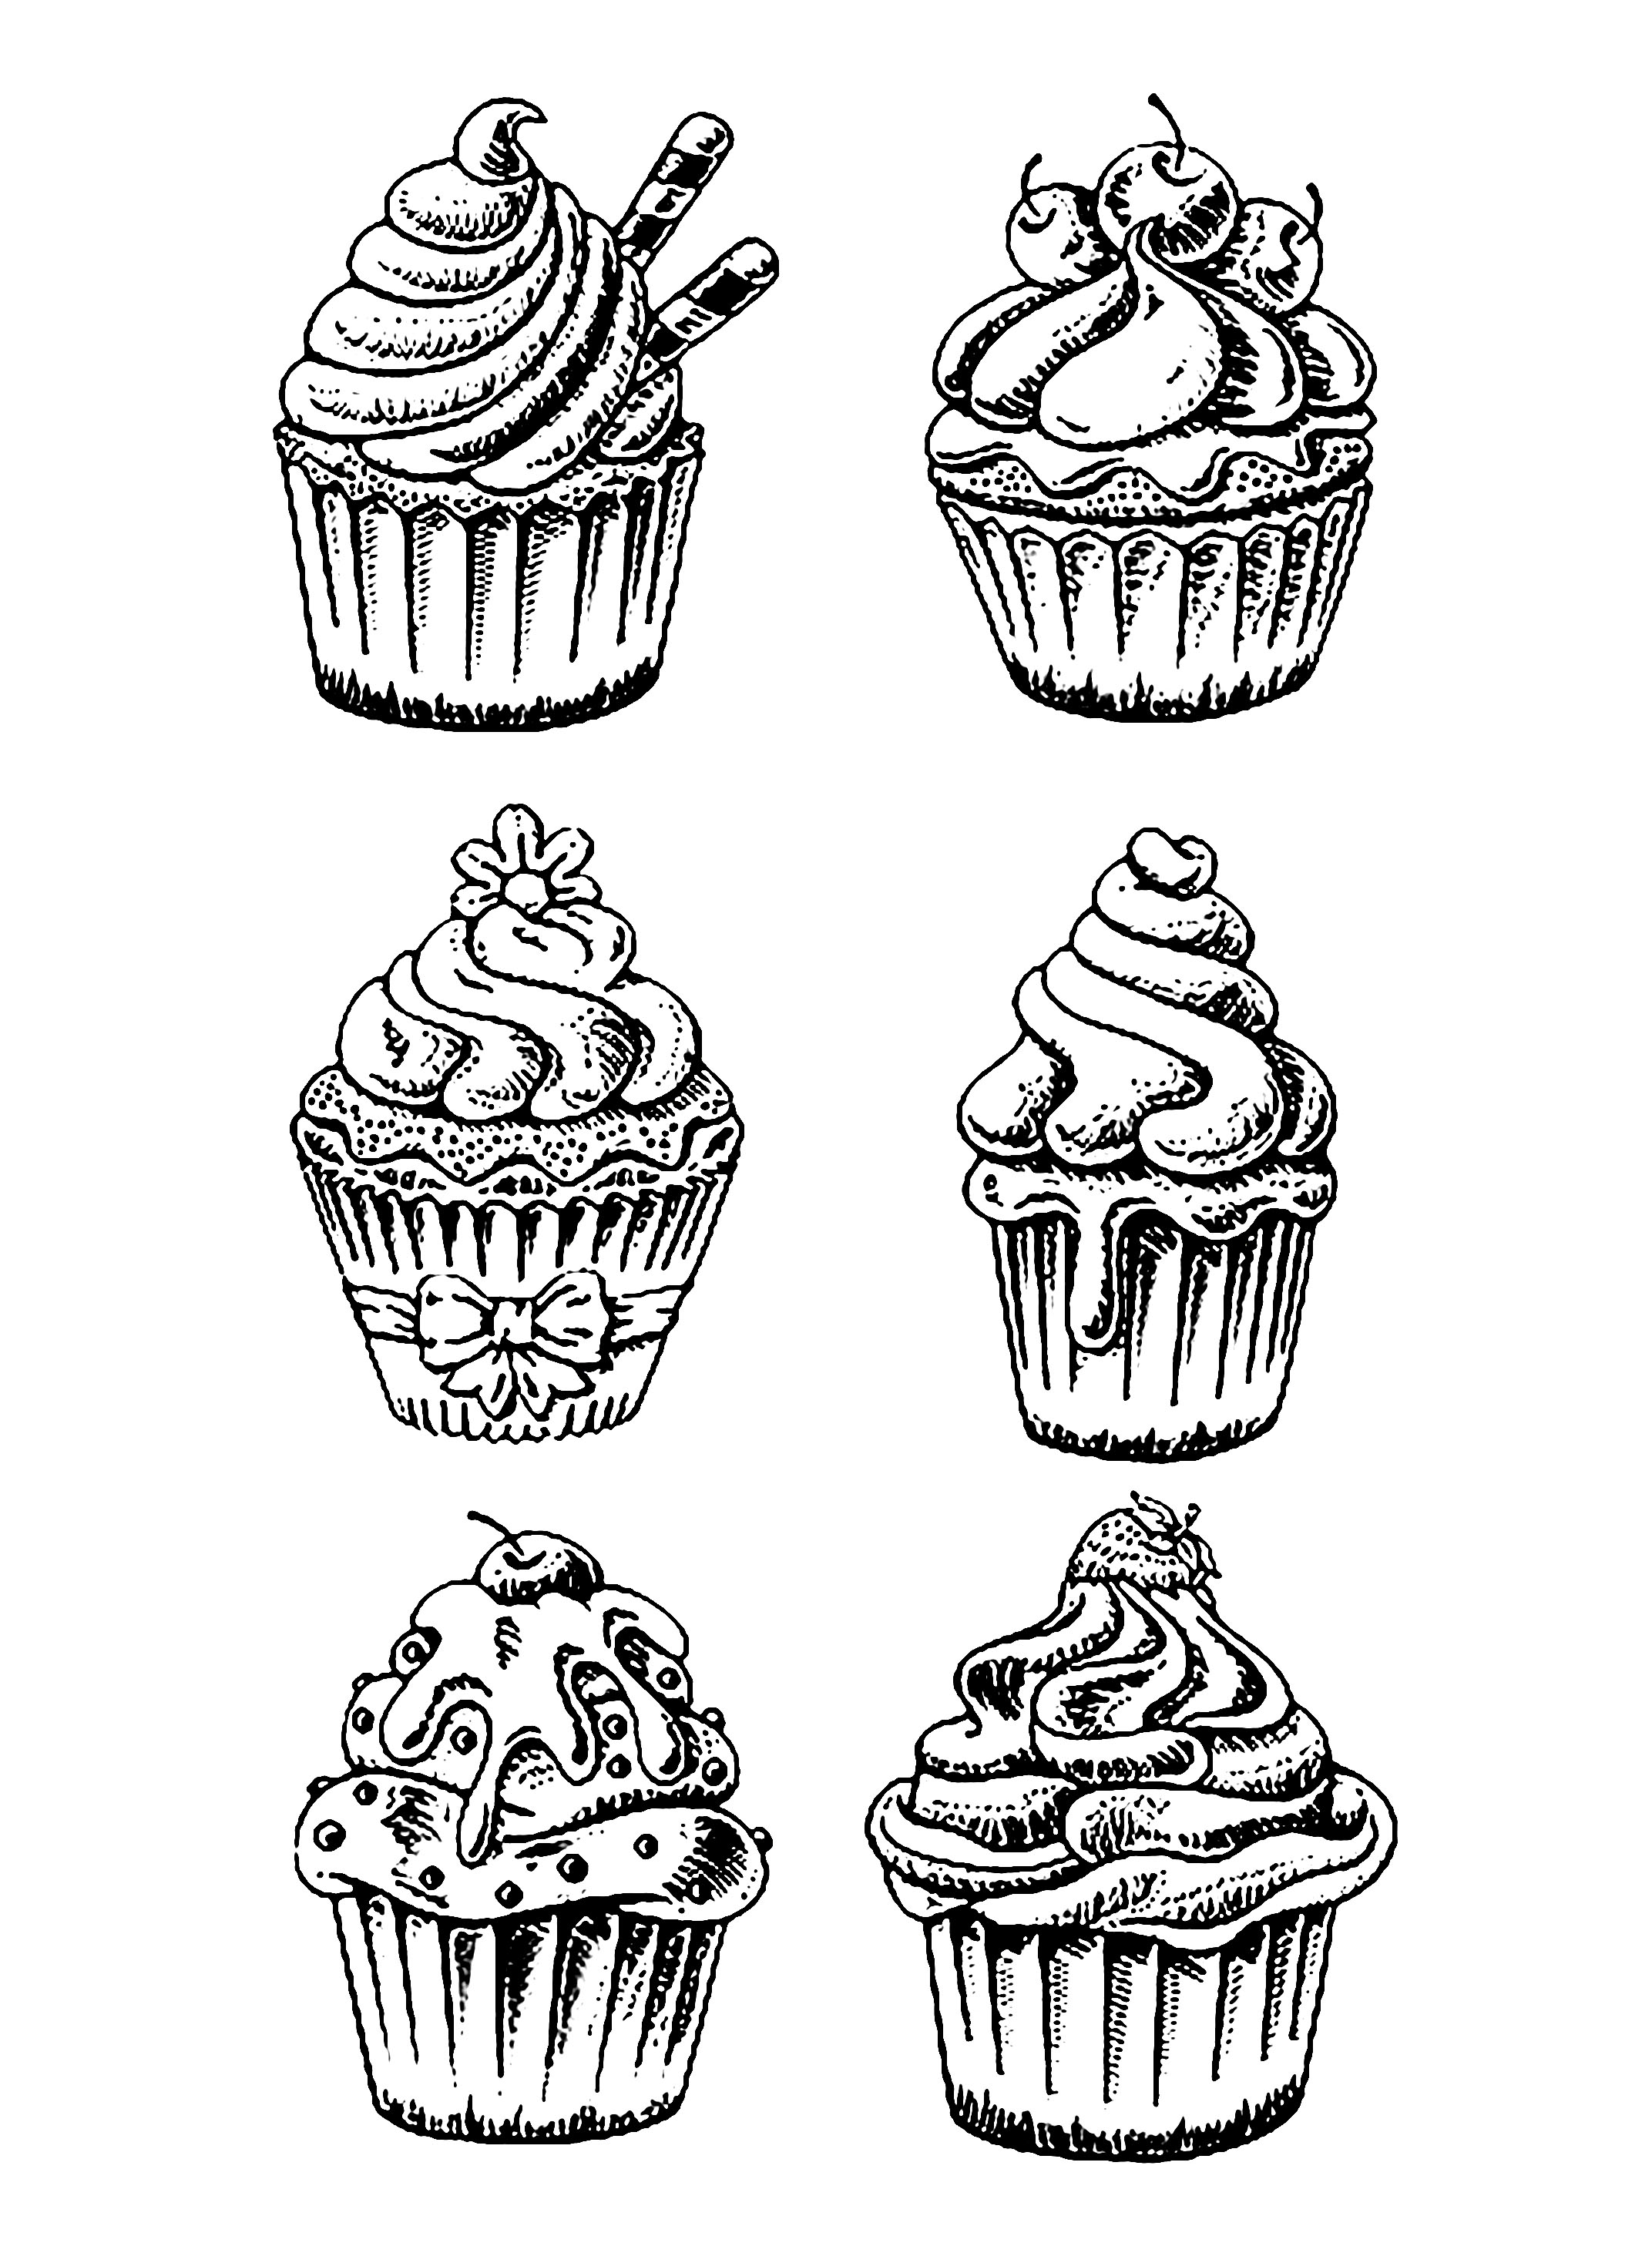 Cupcakes Kawaii divertidos - Bolos de copo - Coloring Pages for Adults